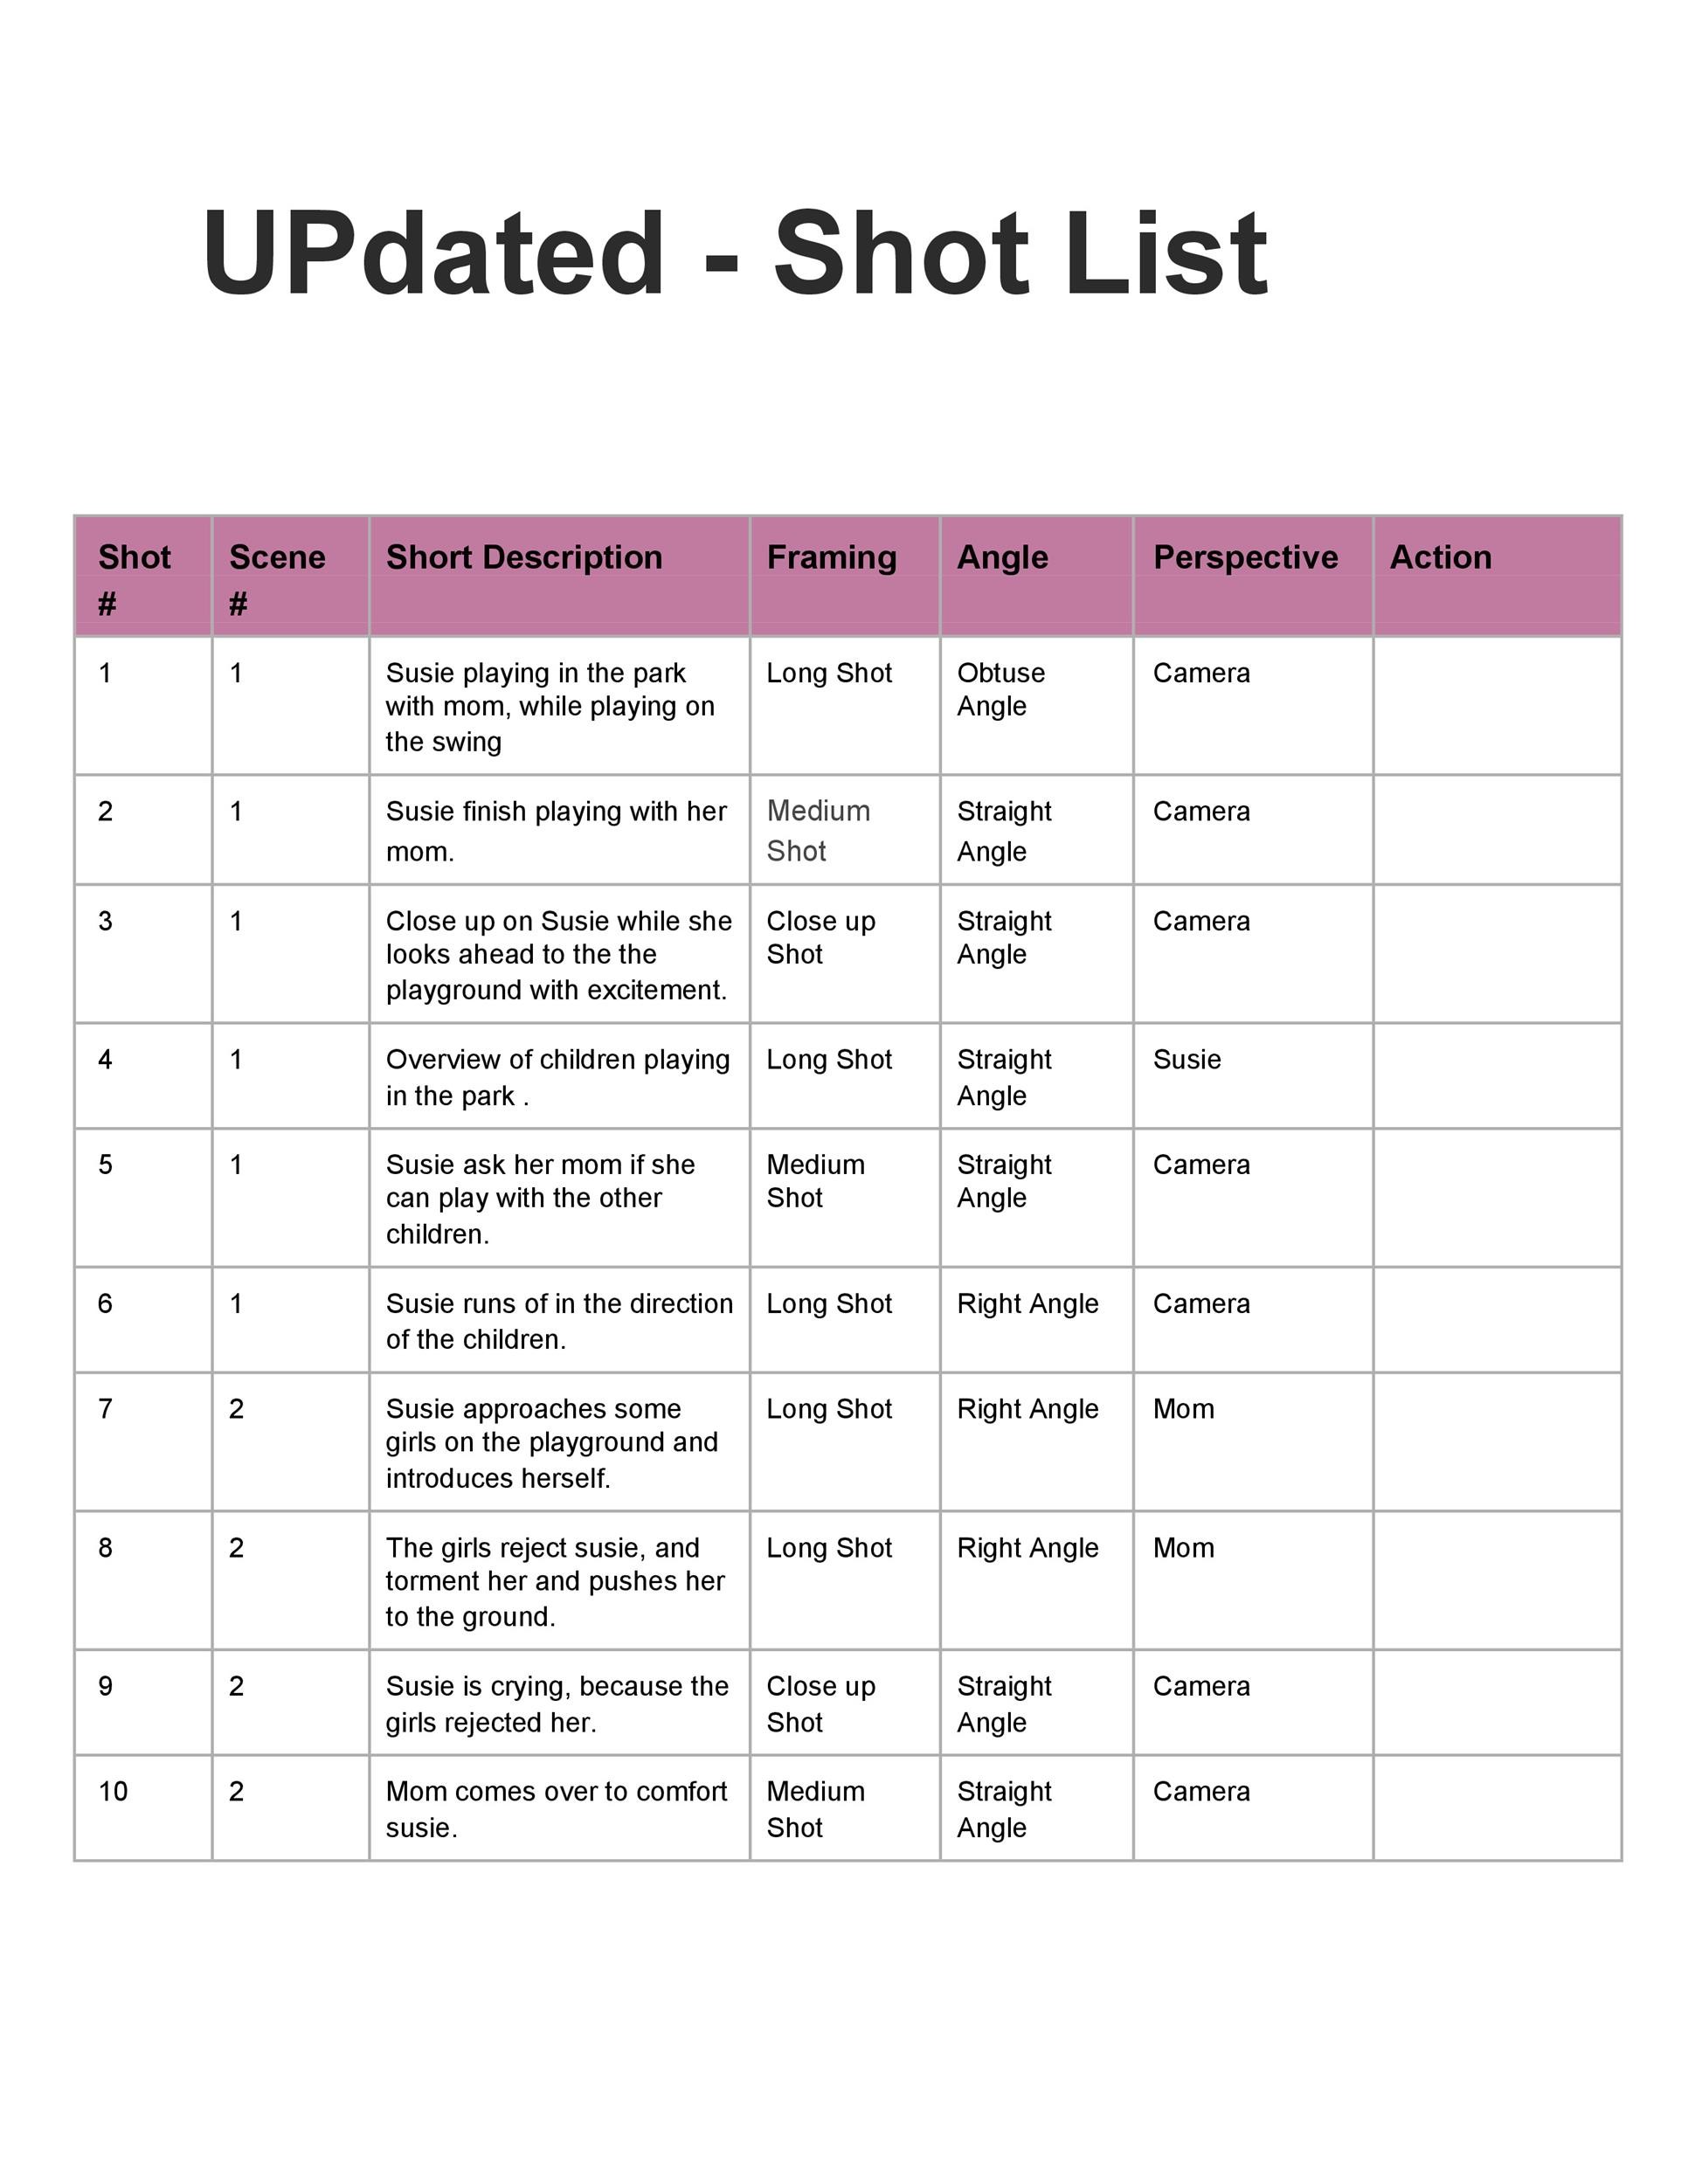 50 Handy Shot List Templates [Film & Photography] ᐅ TemplateLab